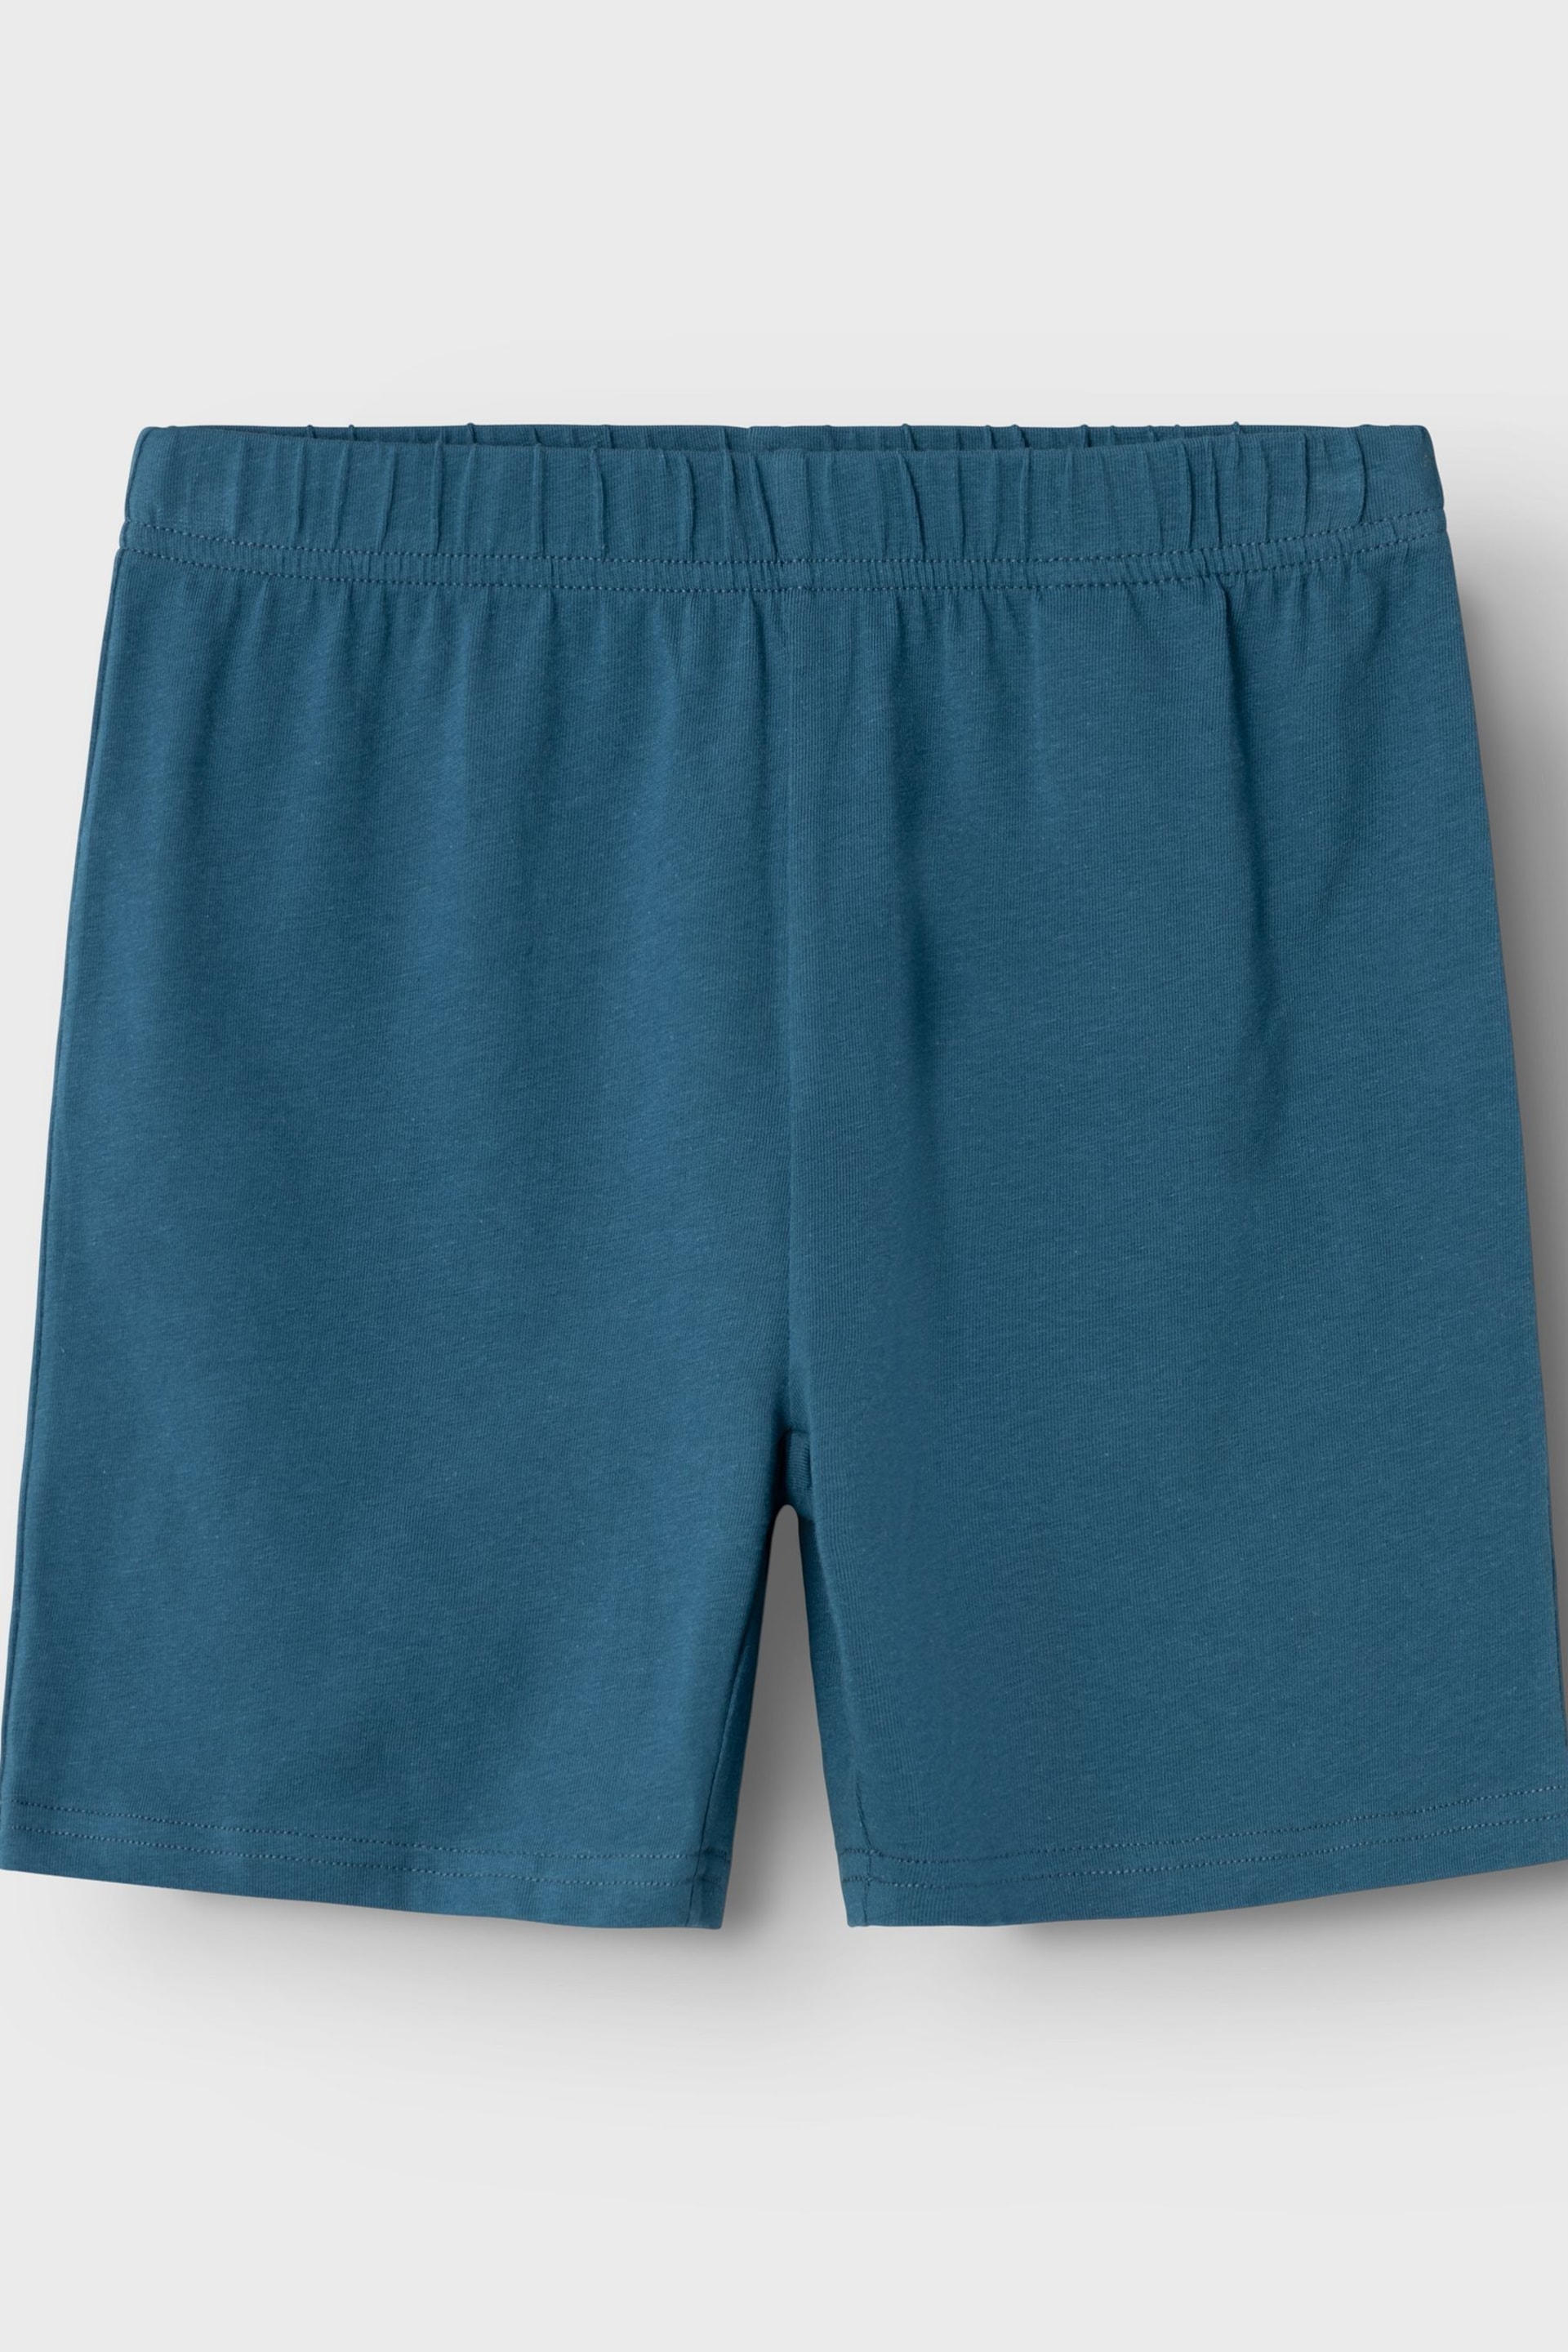 Name It Blue Short Sleeve Printed Pyjamas - Image 3 of 4